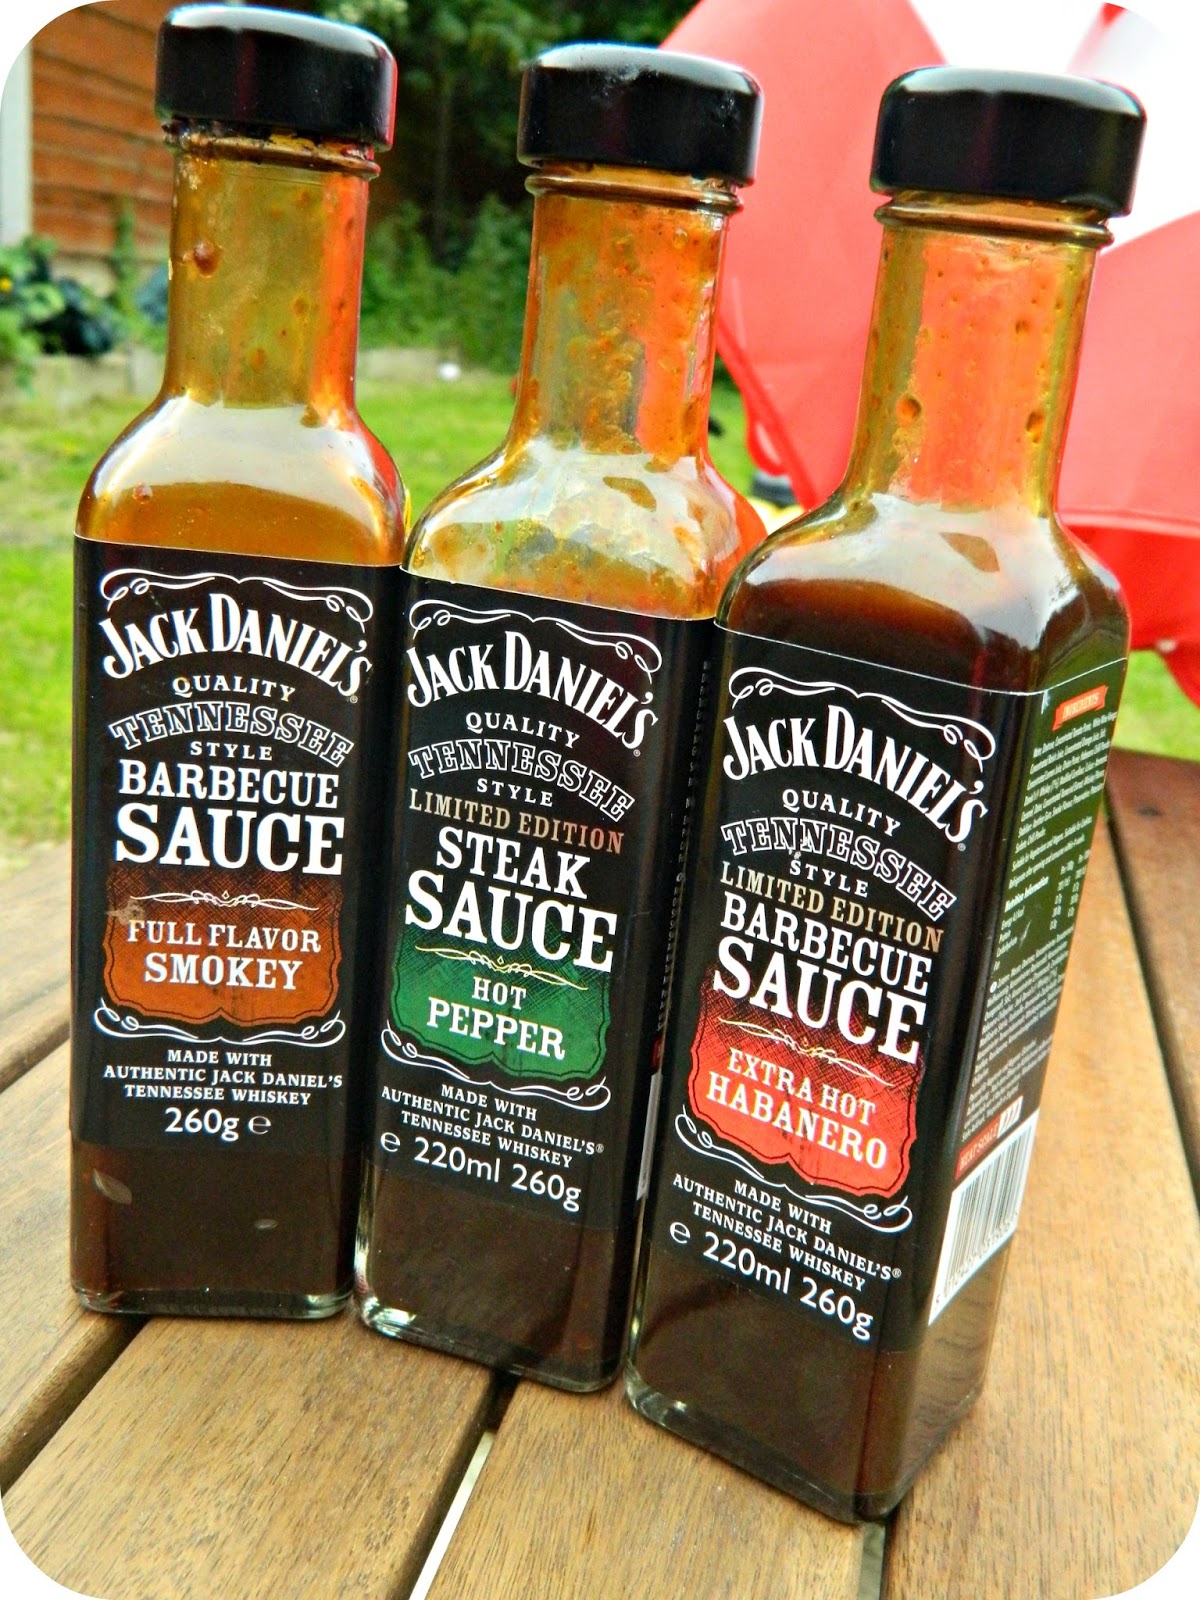 Jack Daniel's Barbecue Sauces